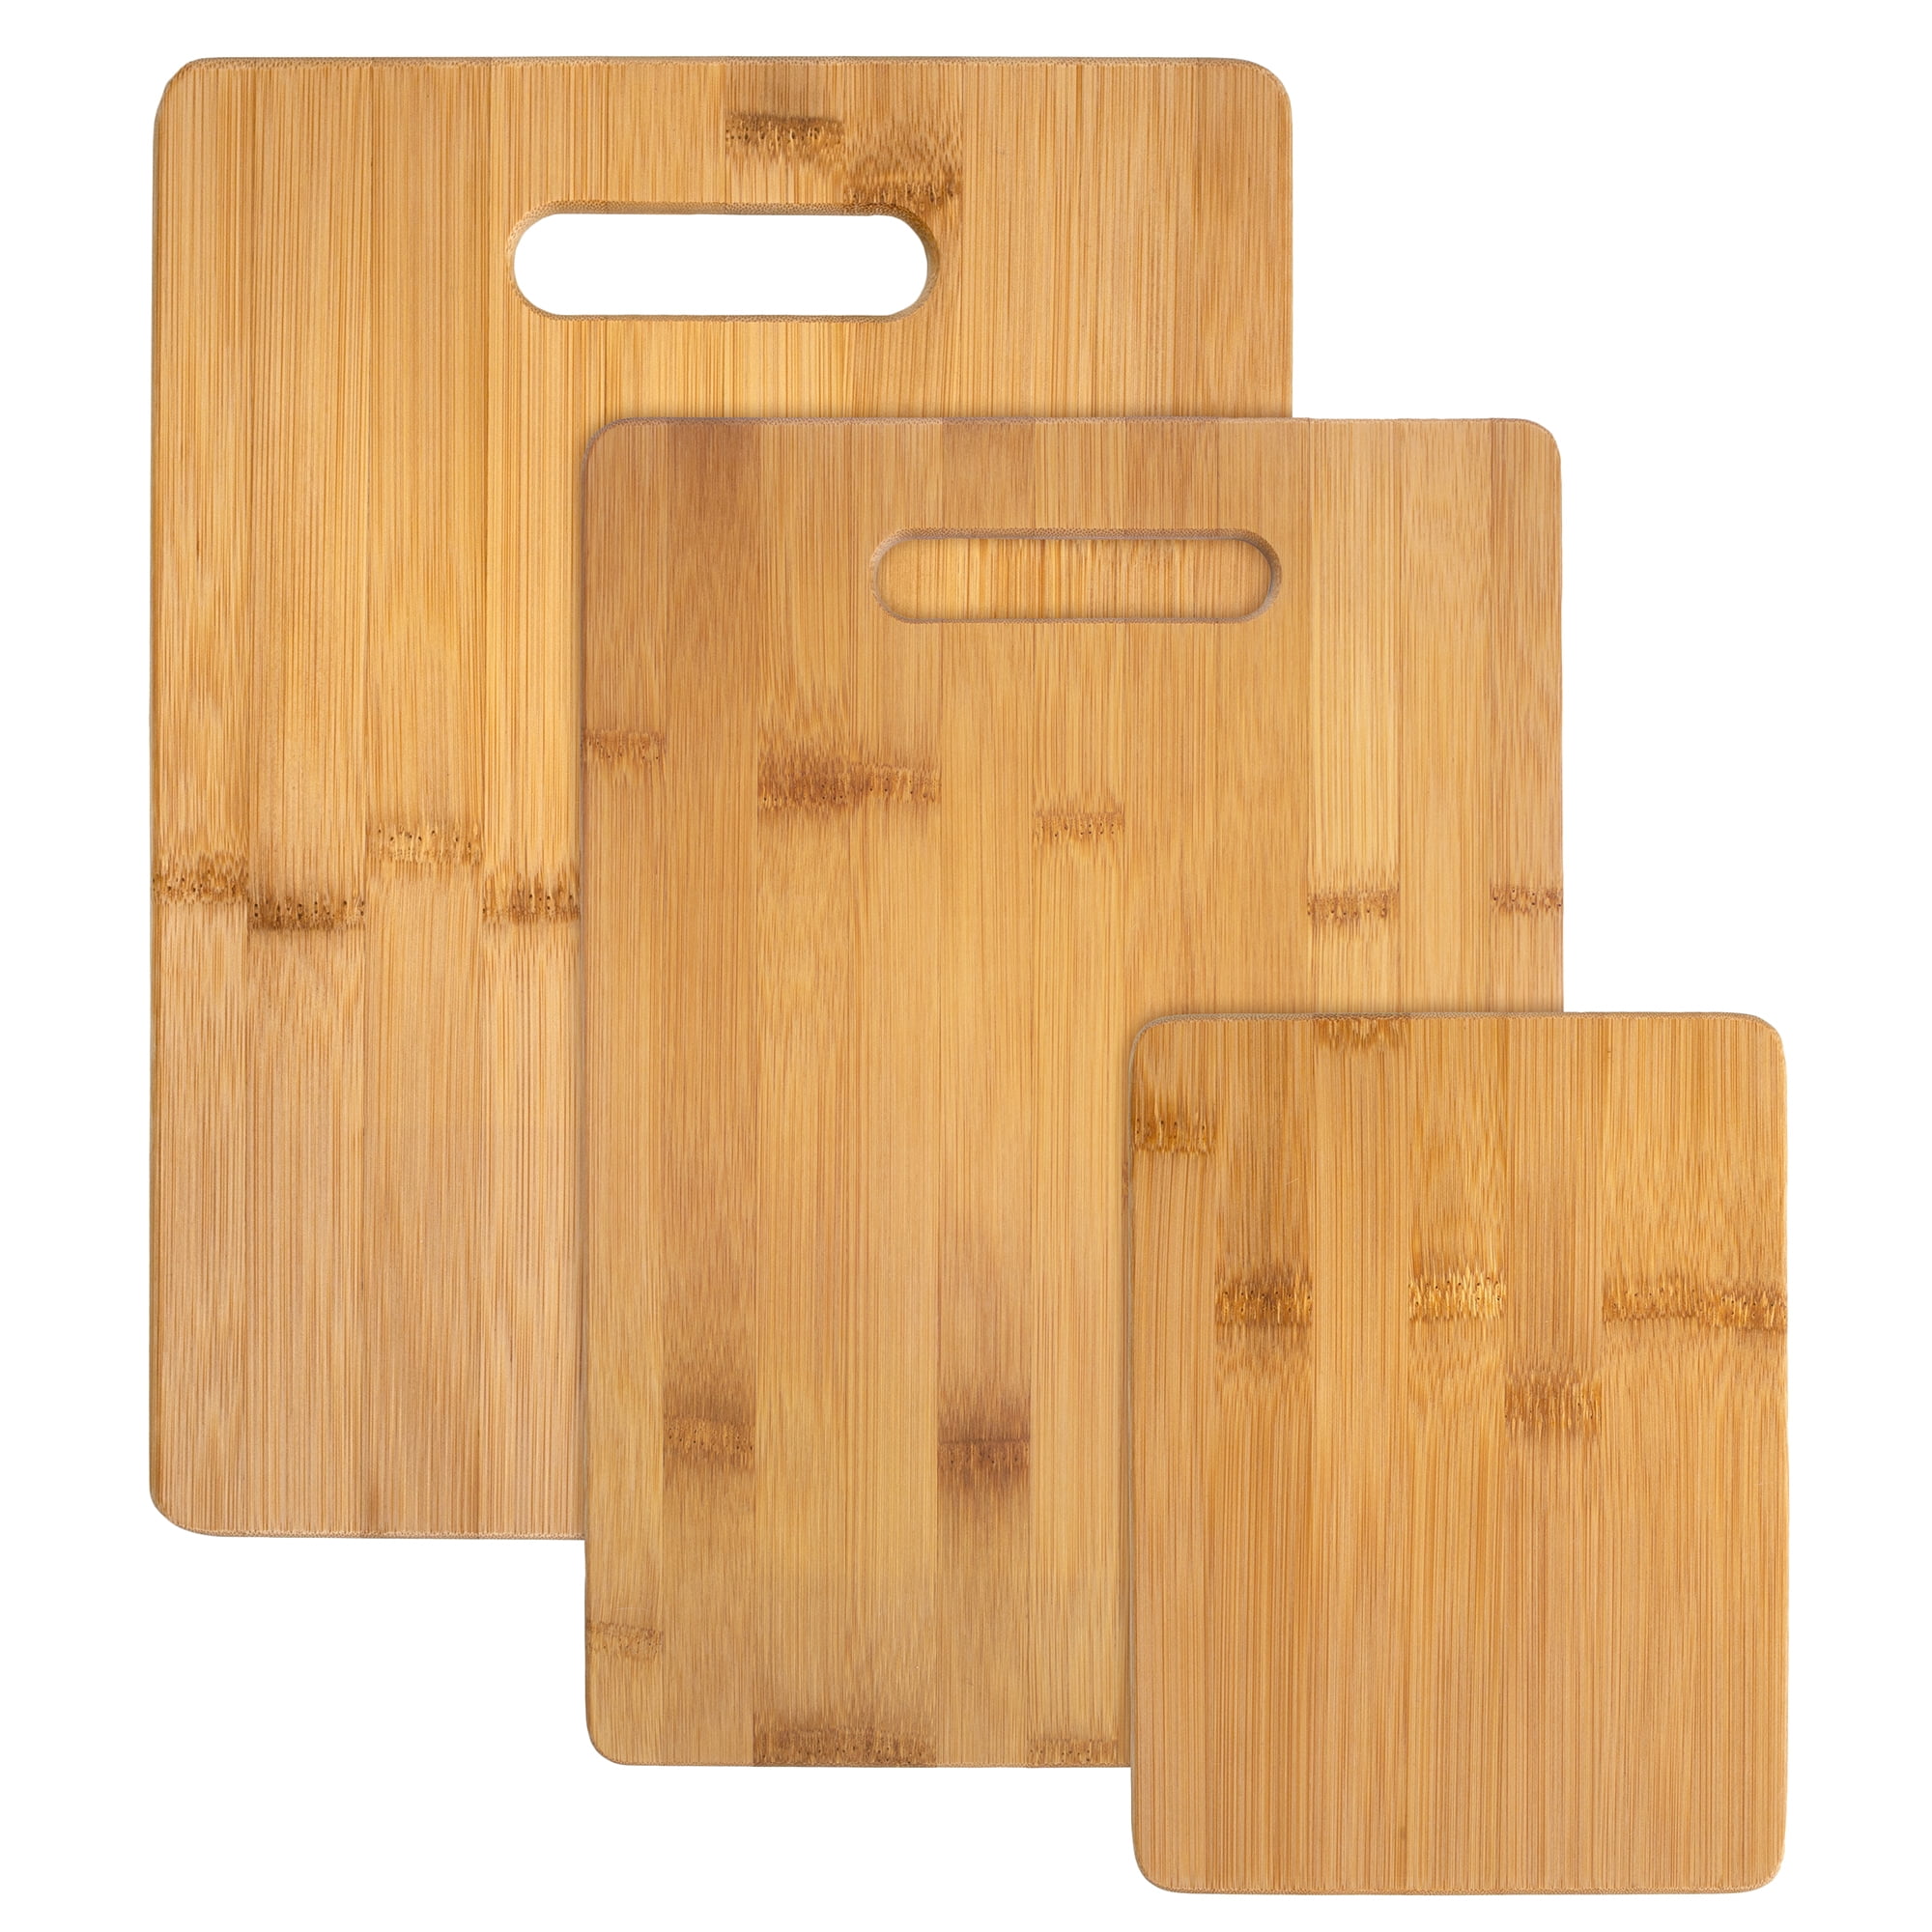 3-Piece Bamboo Cutting Board Set, 15 x 12, 12 x 9 and 9 x 6